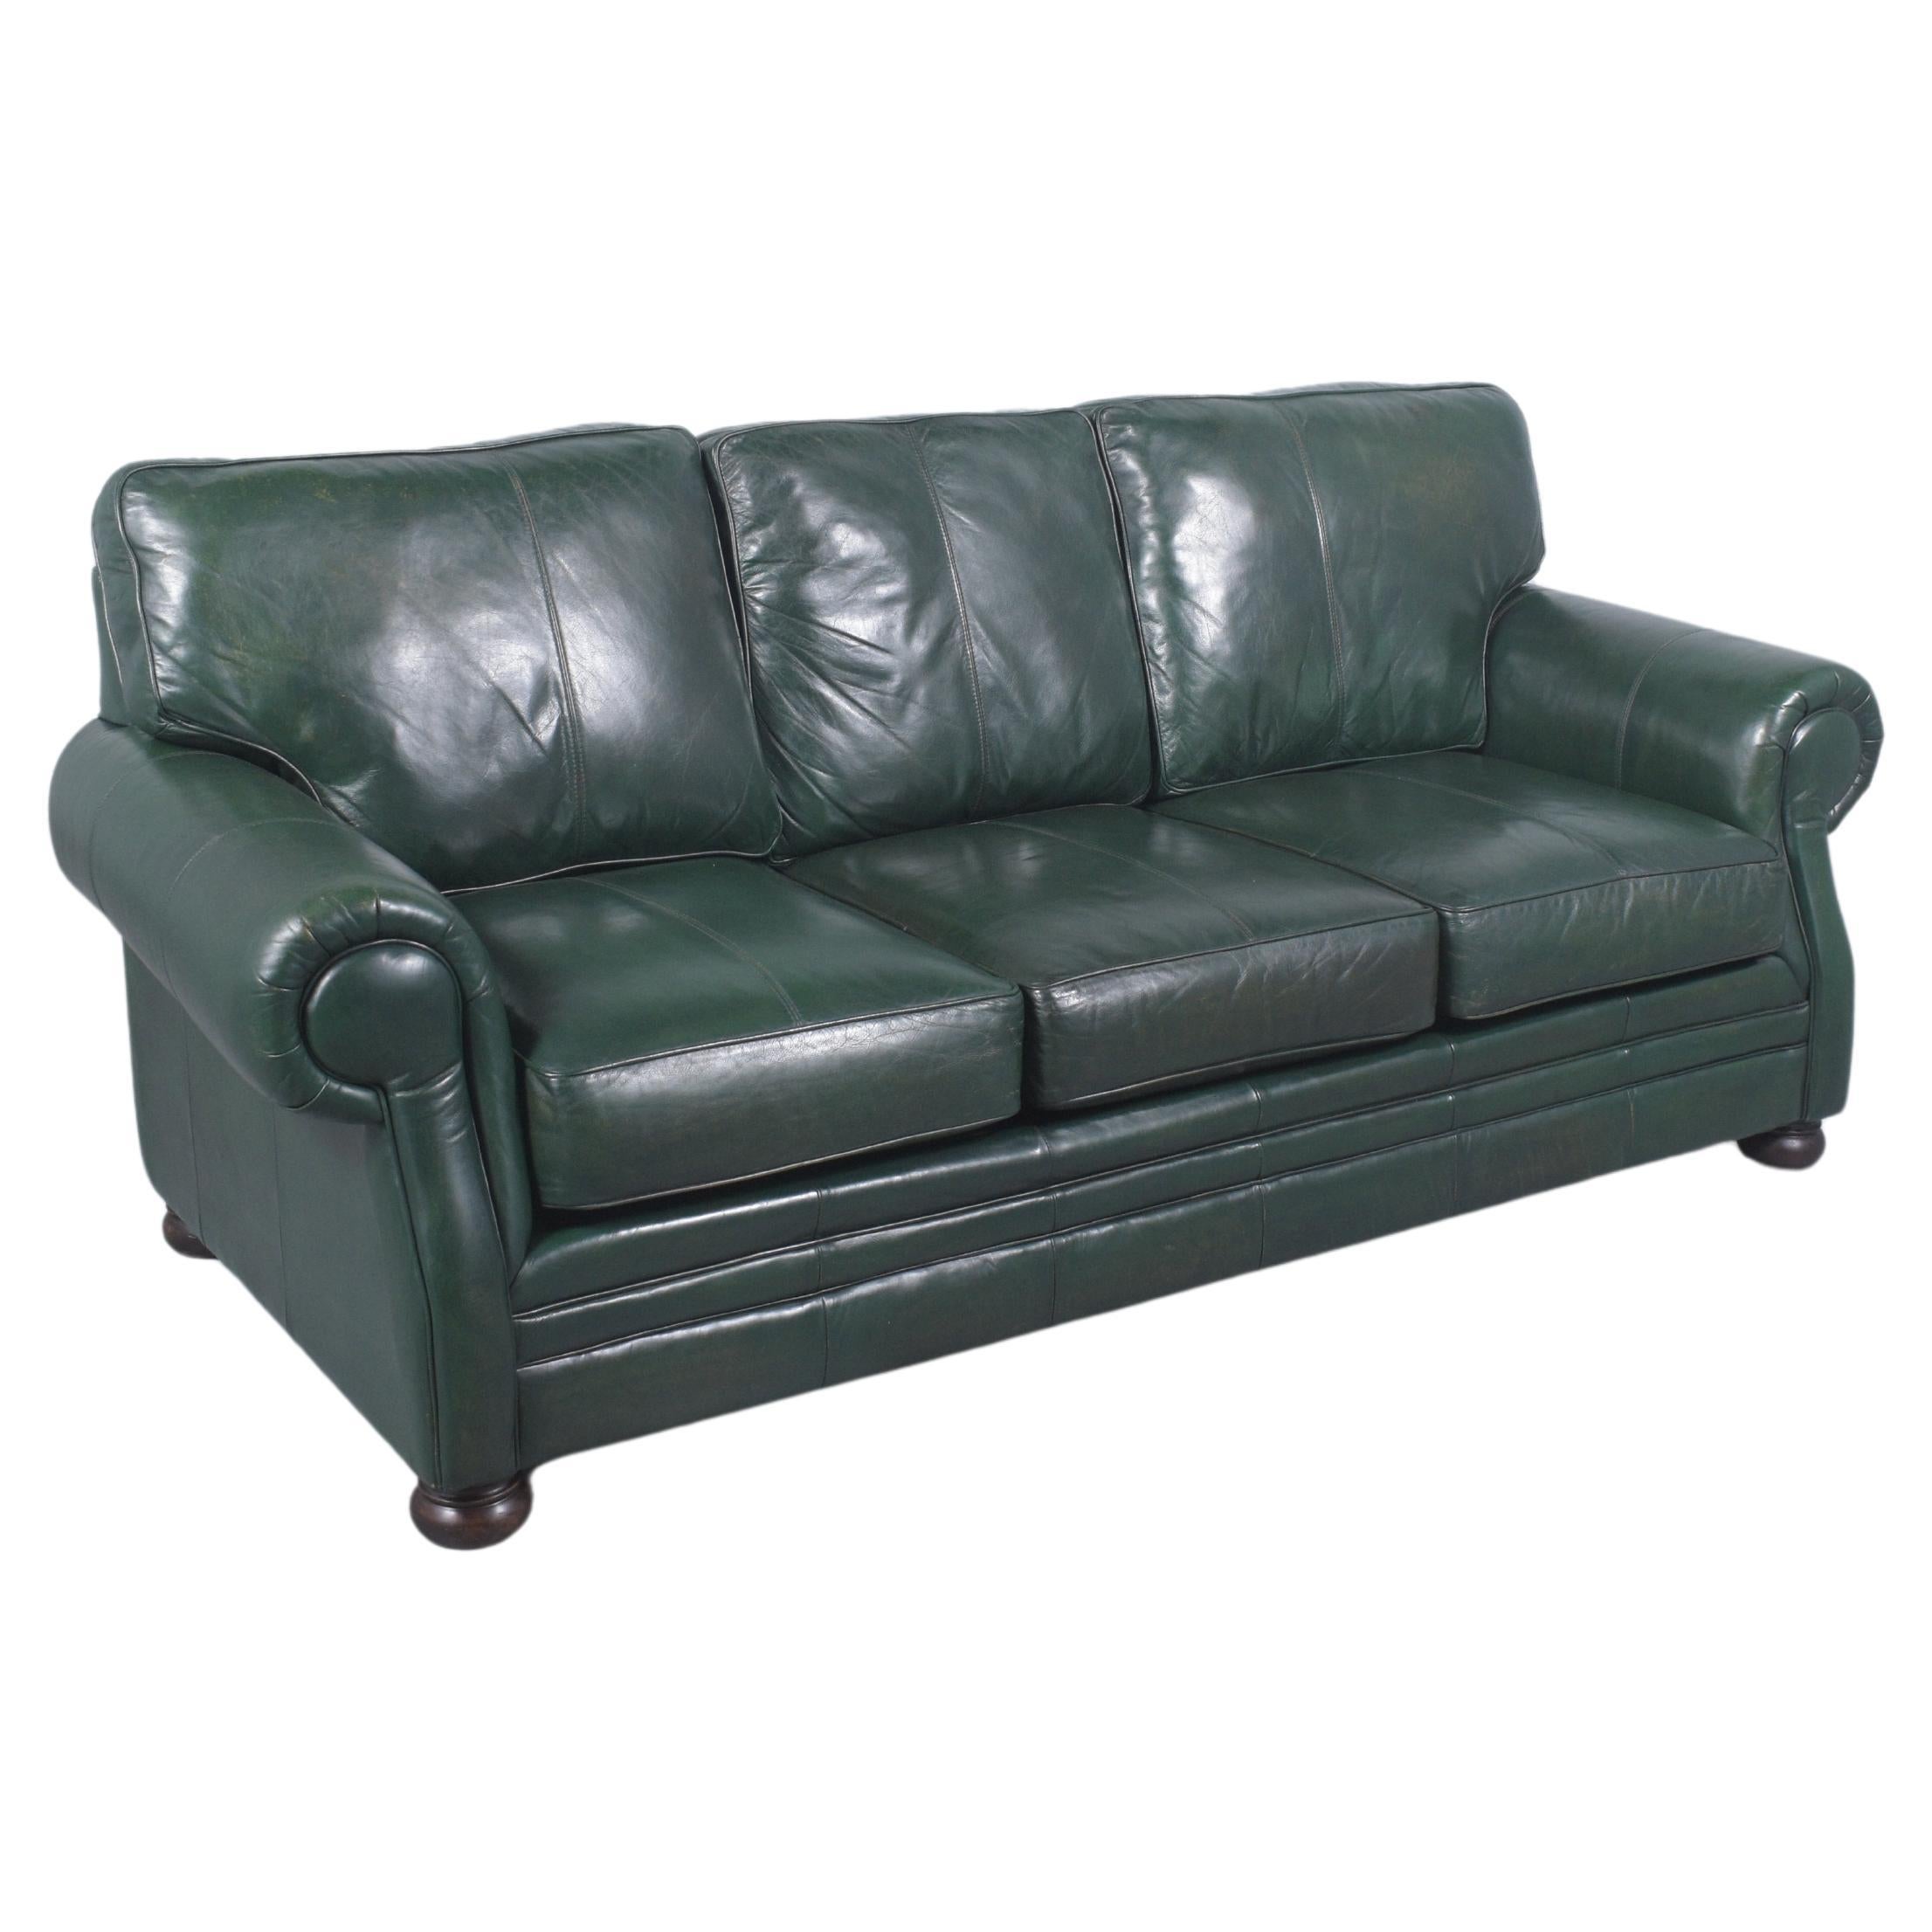 Elegant 1980s Restored Leather Sofa: A Blend of Vintage and Modern